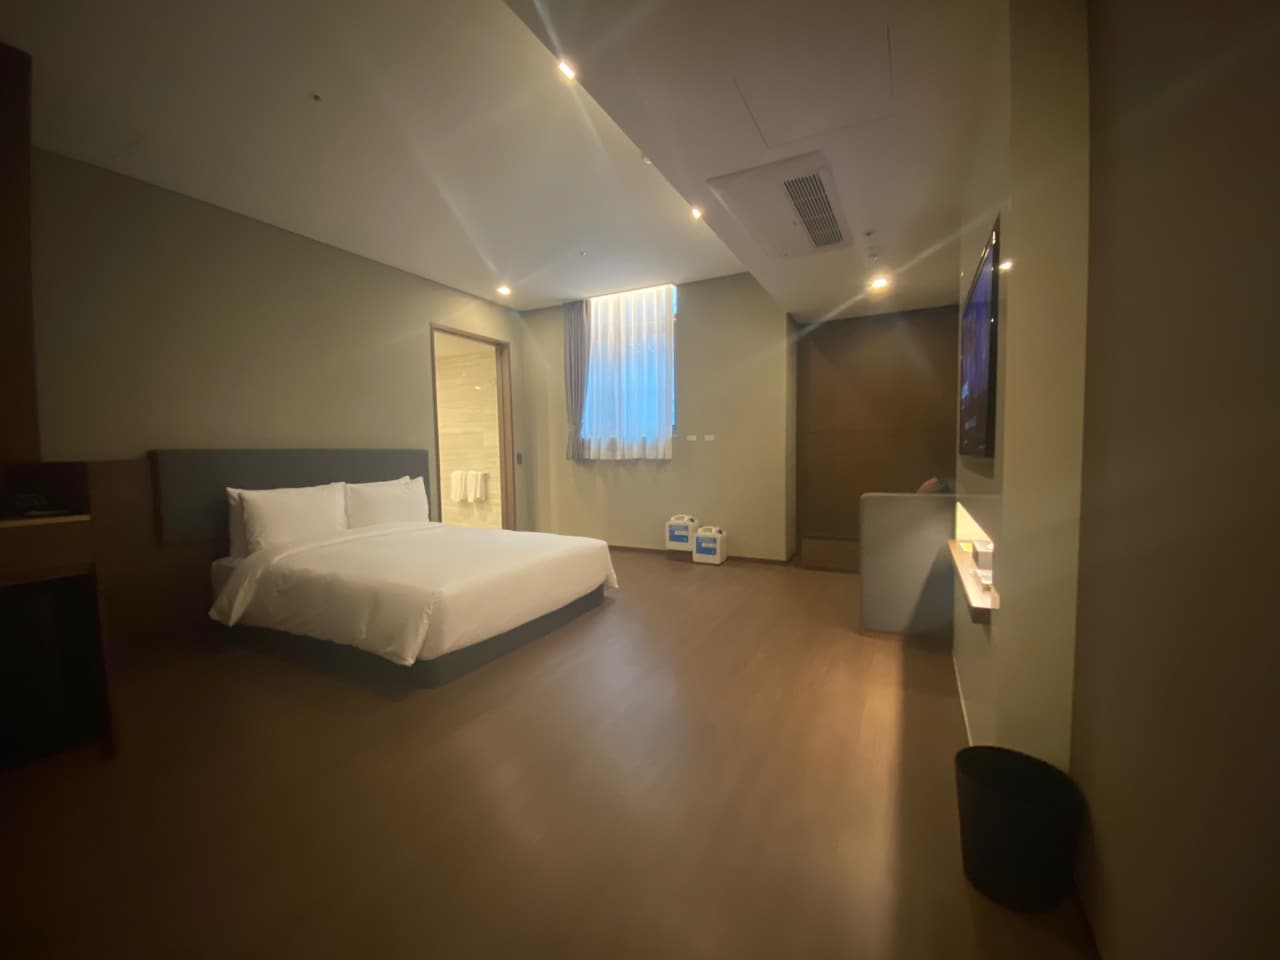 ENA Suite Hotel Namdaemun3 : Spacious hotel room decorated in oak color